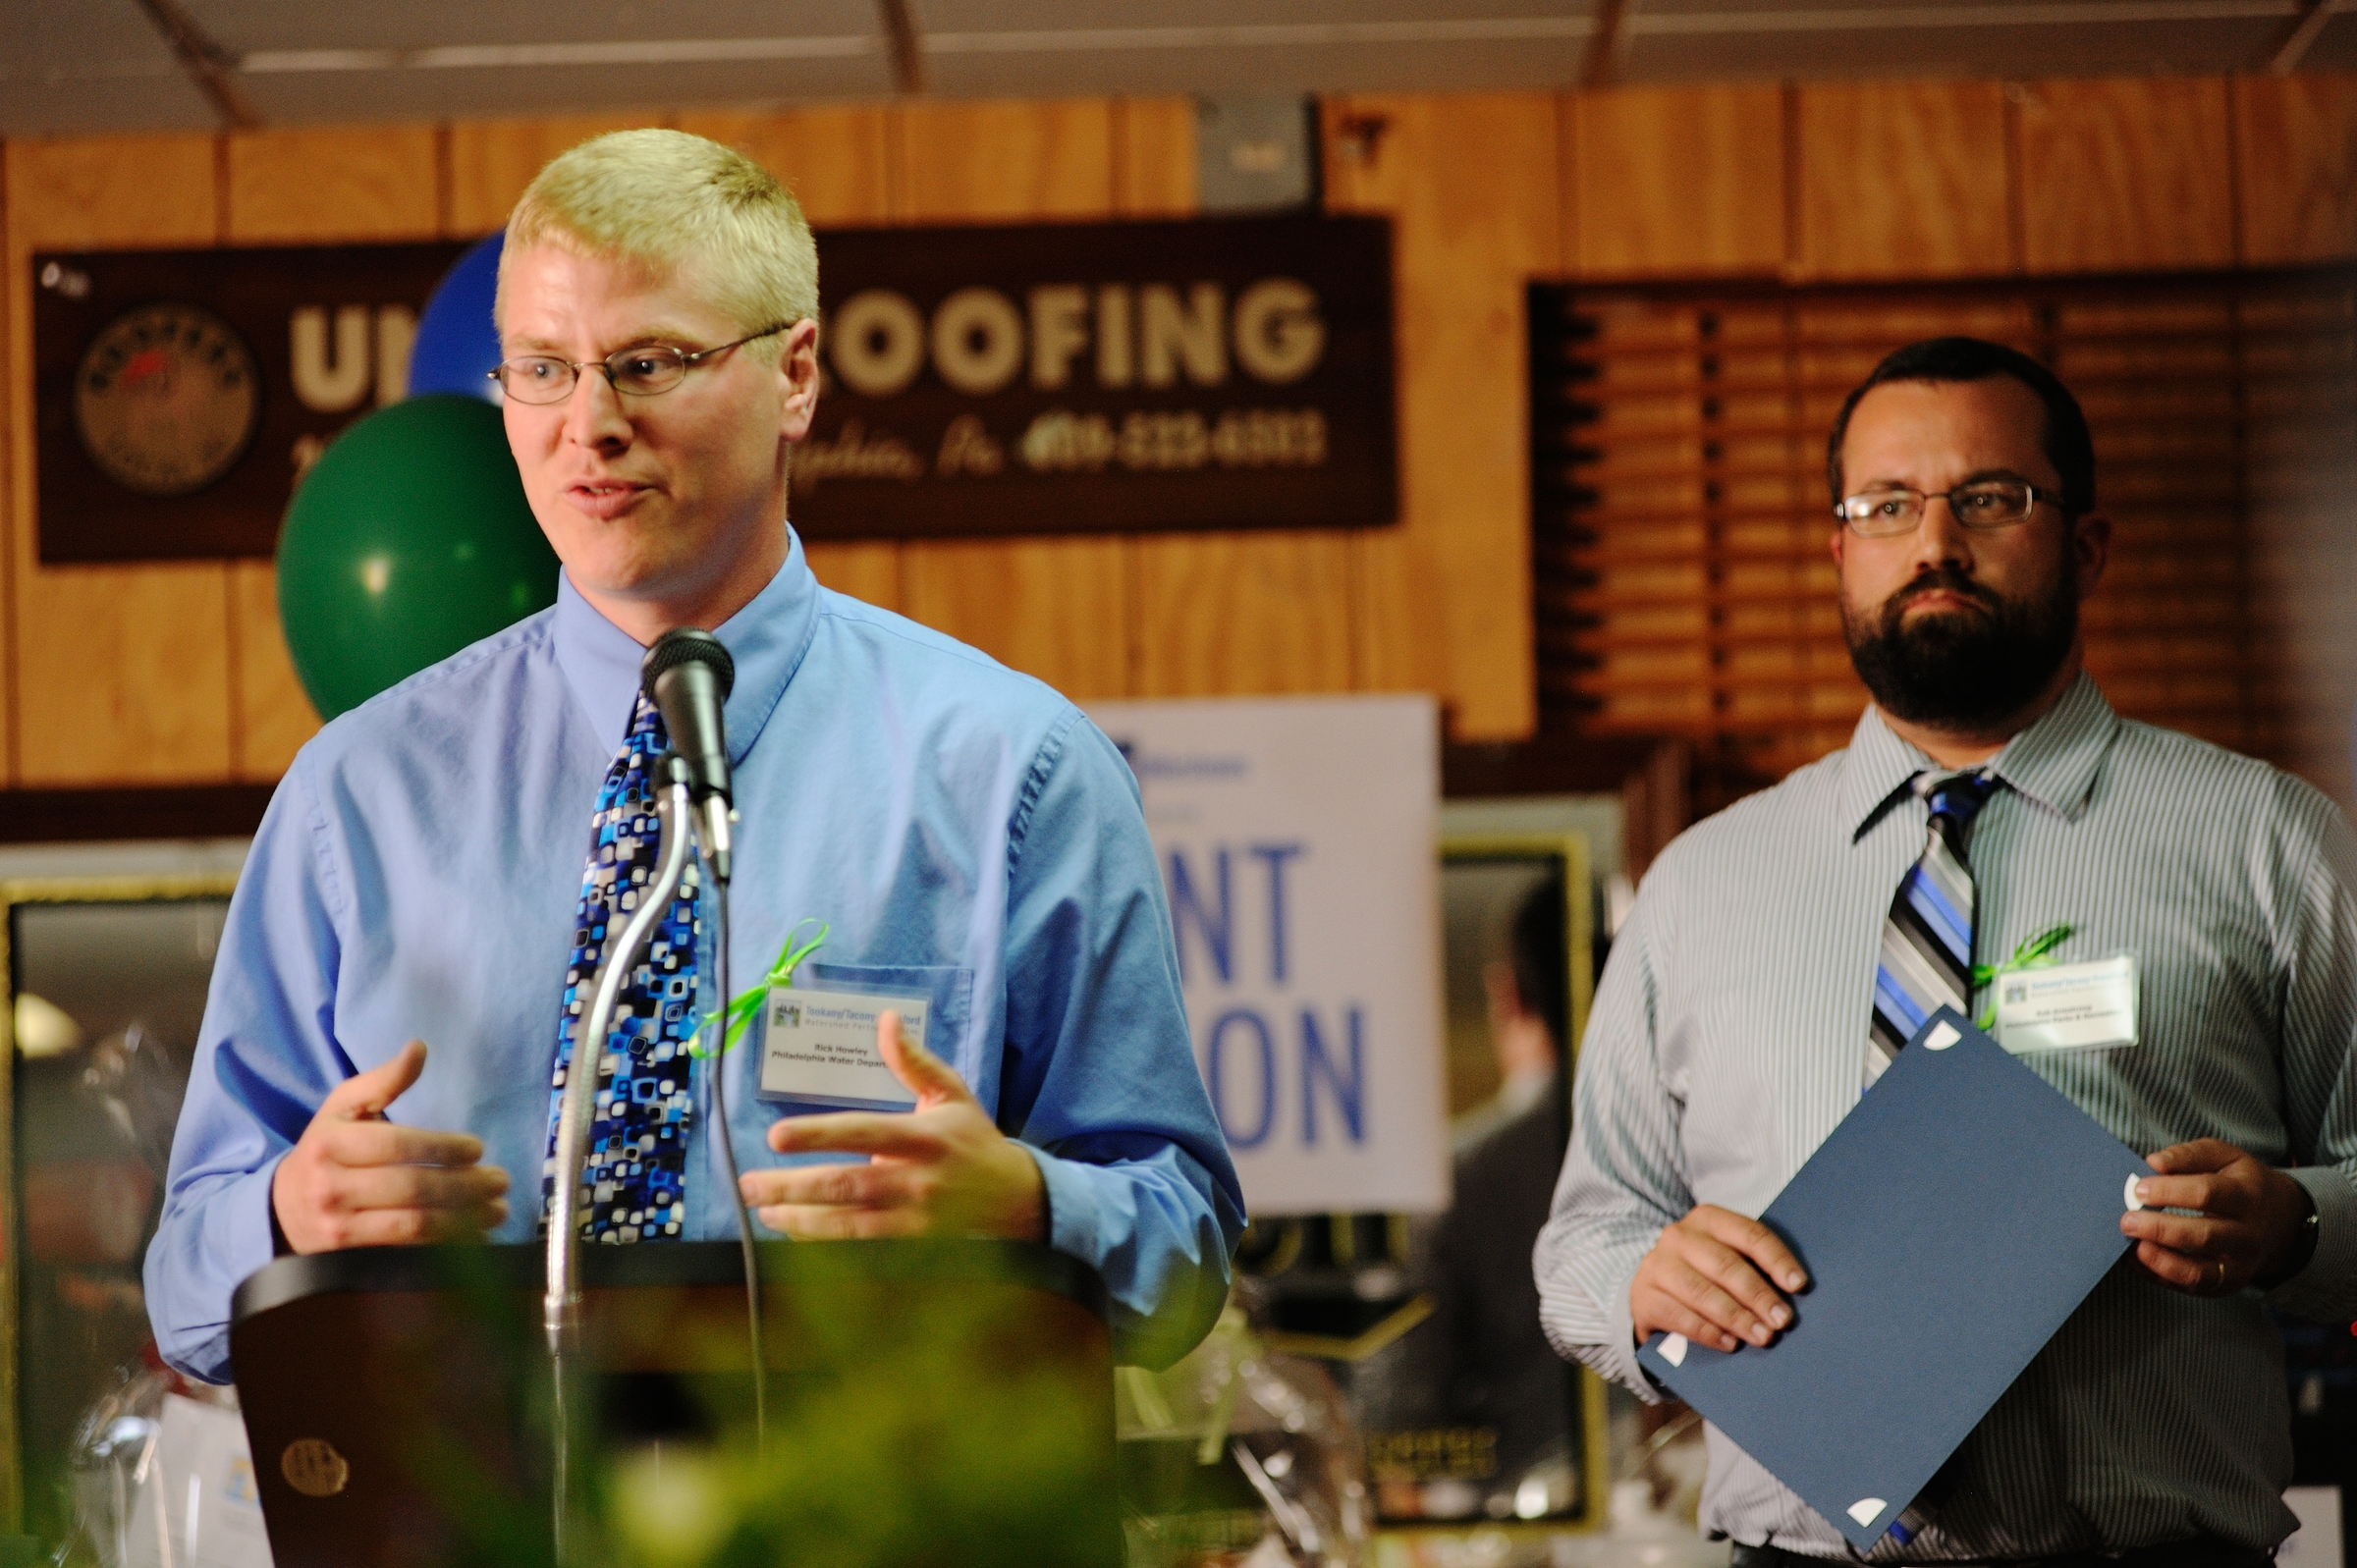 Rick Howley & Rob Armstrong receiving a Municipal Leader Award